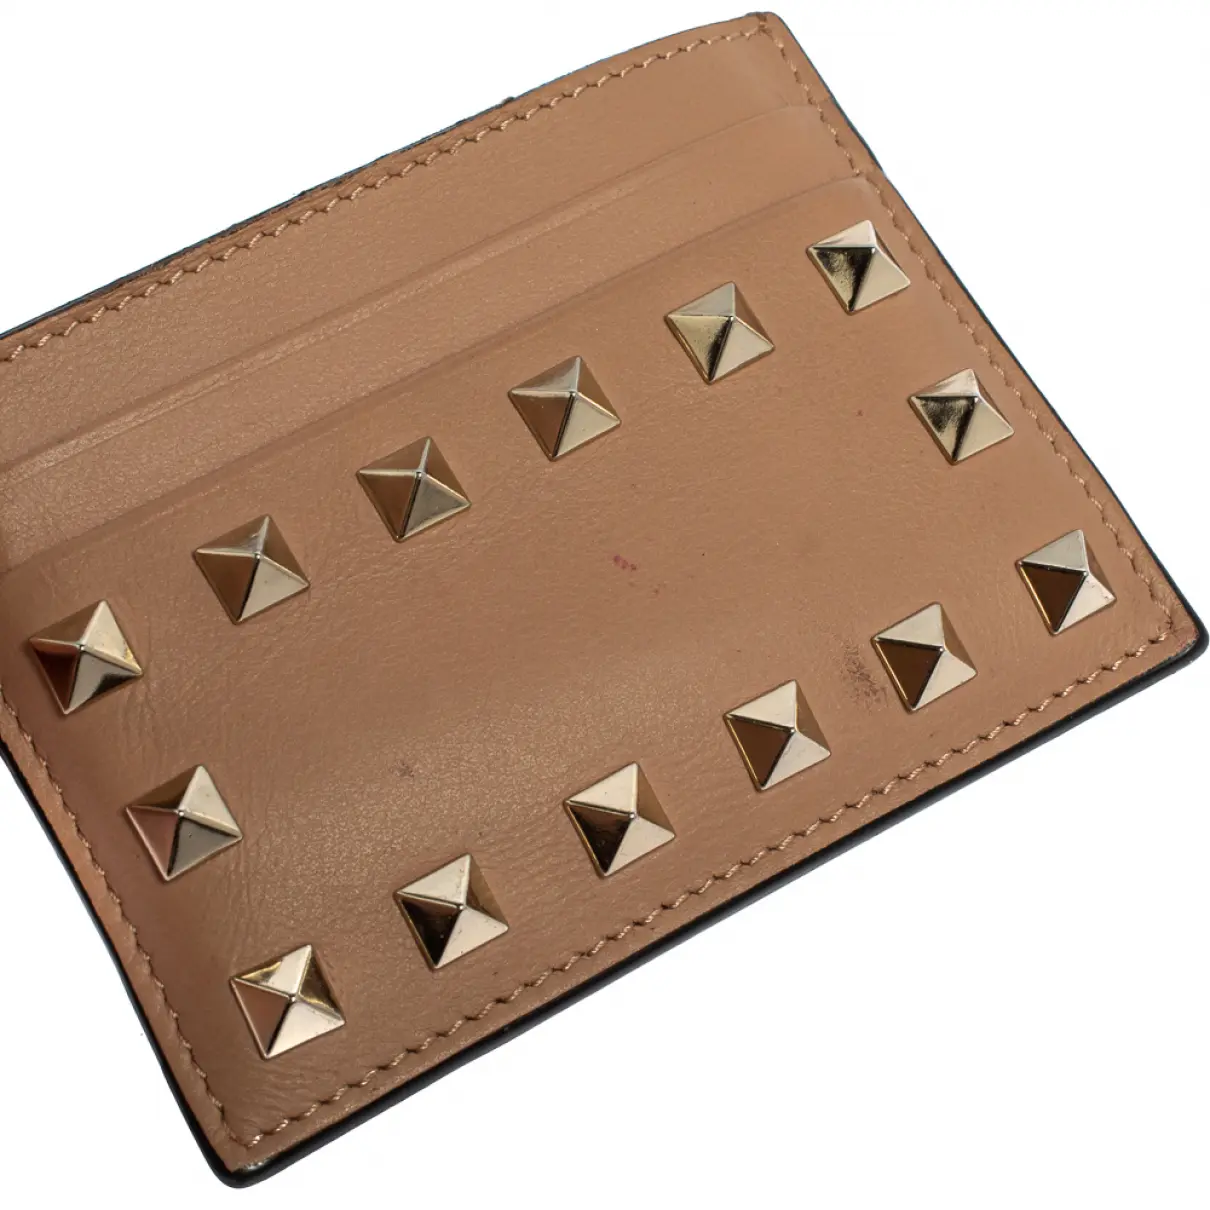 Leather purse Valentino Garavani